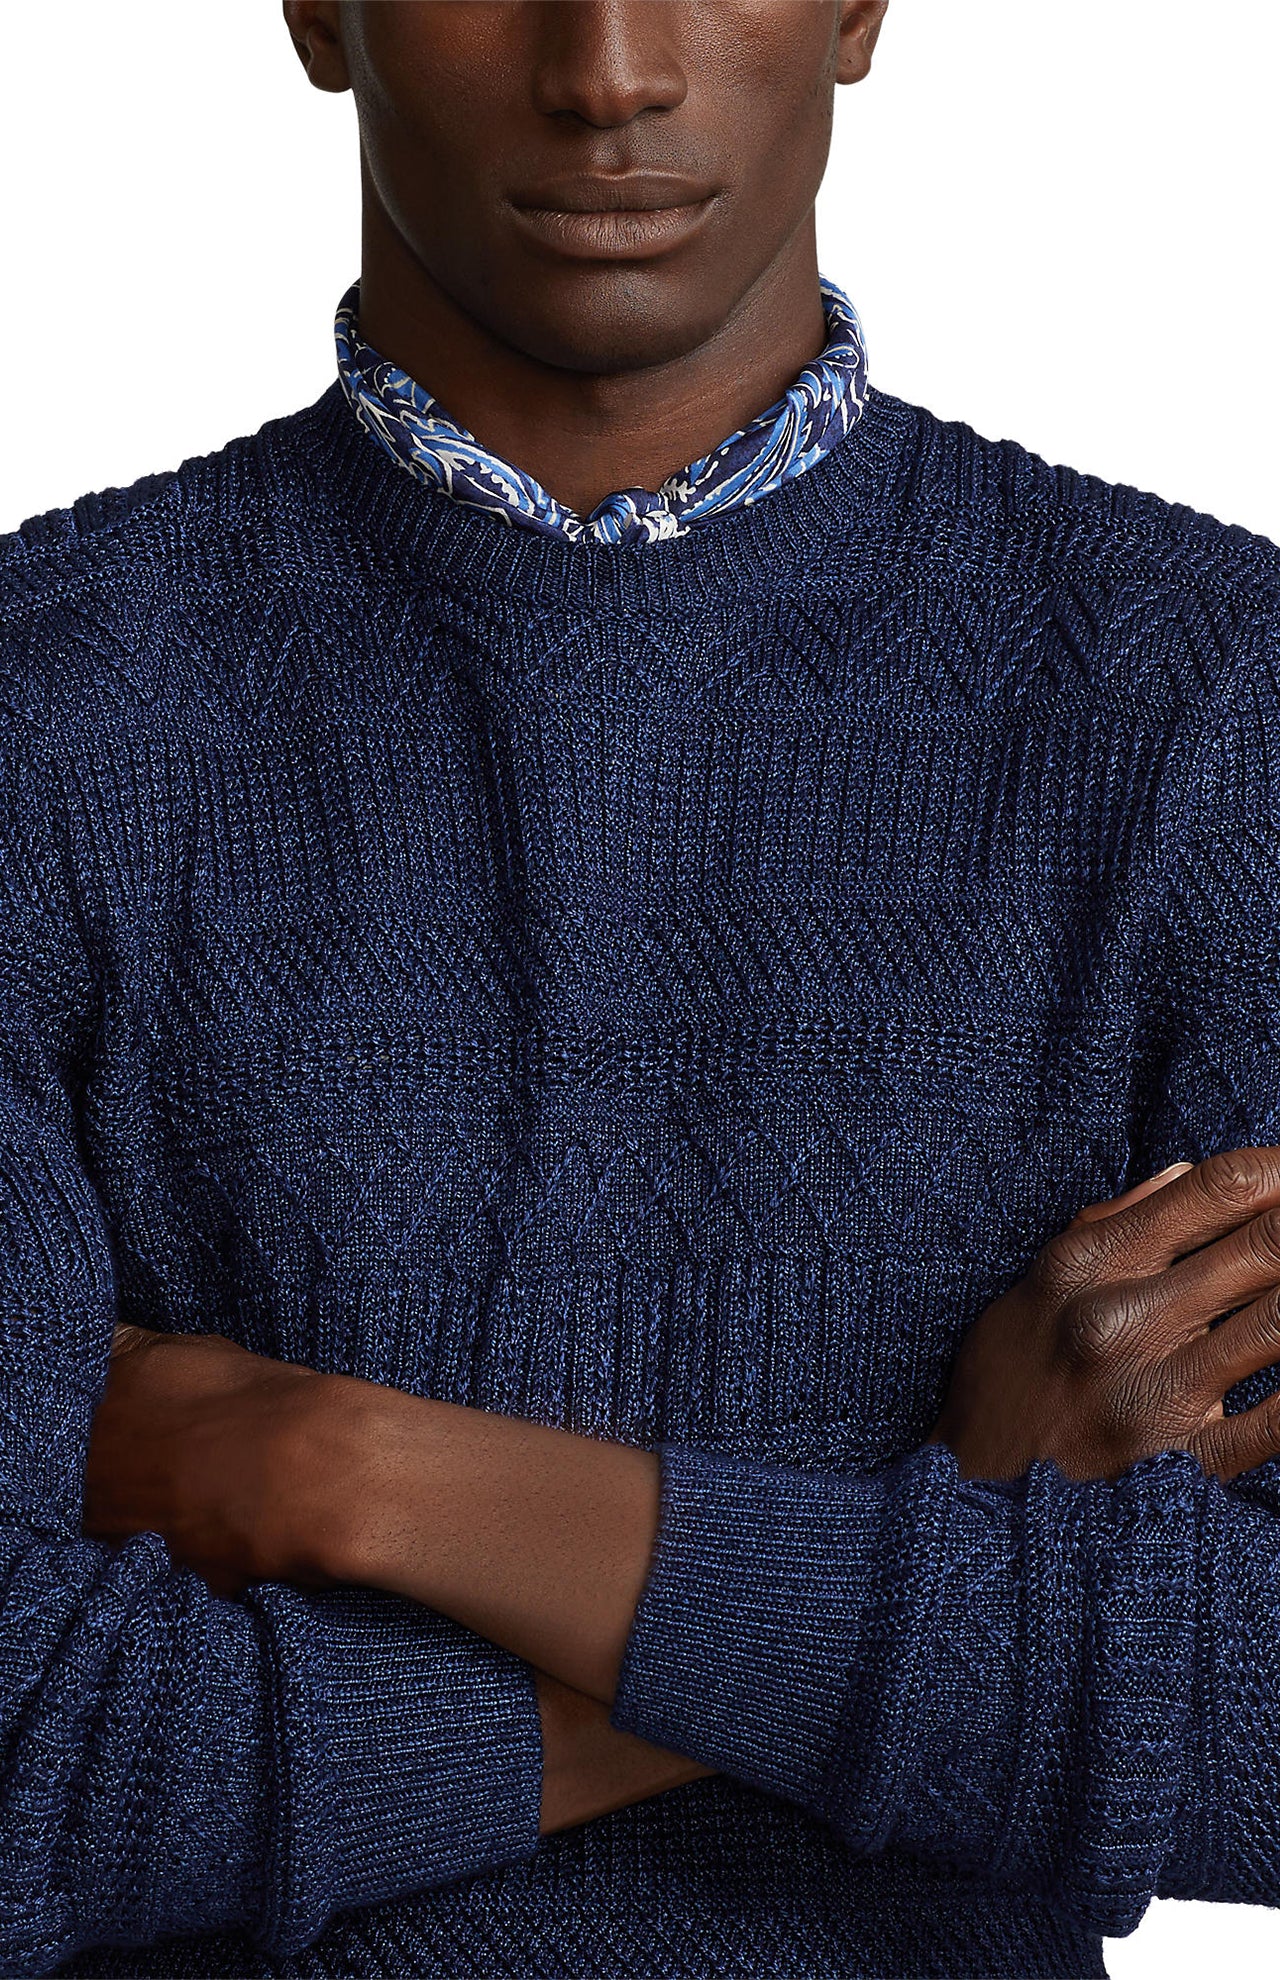 Long Sleeve Textured Sweater (7391598772339)